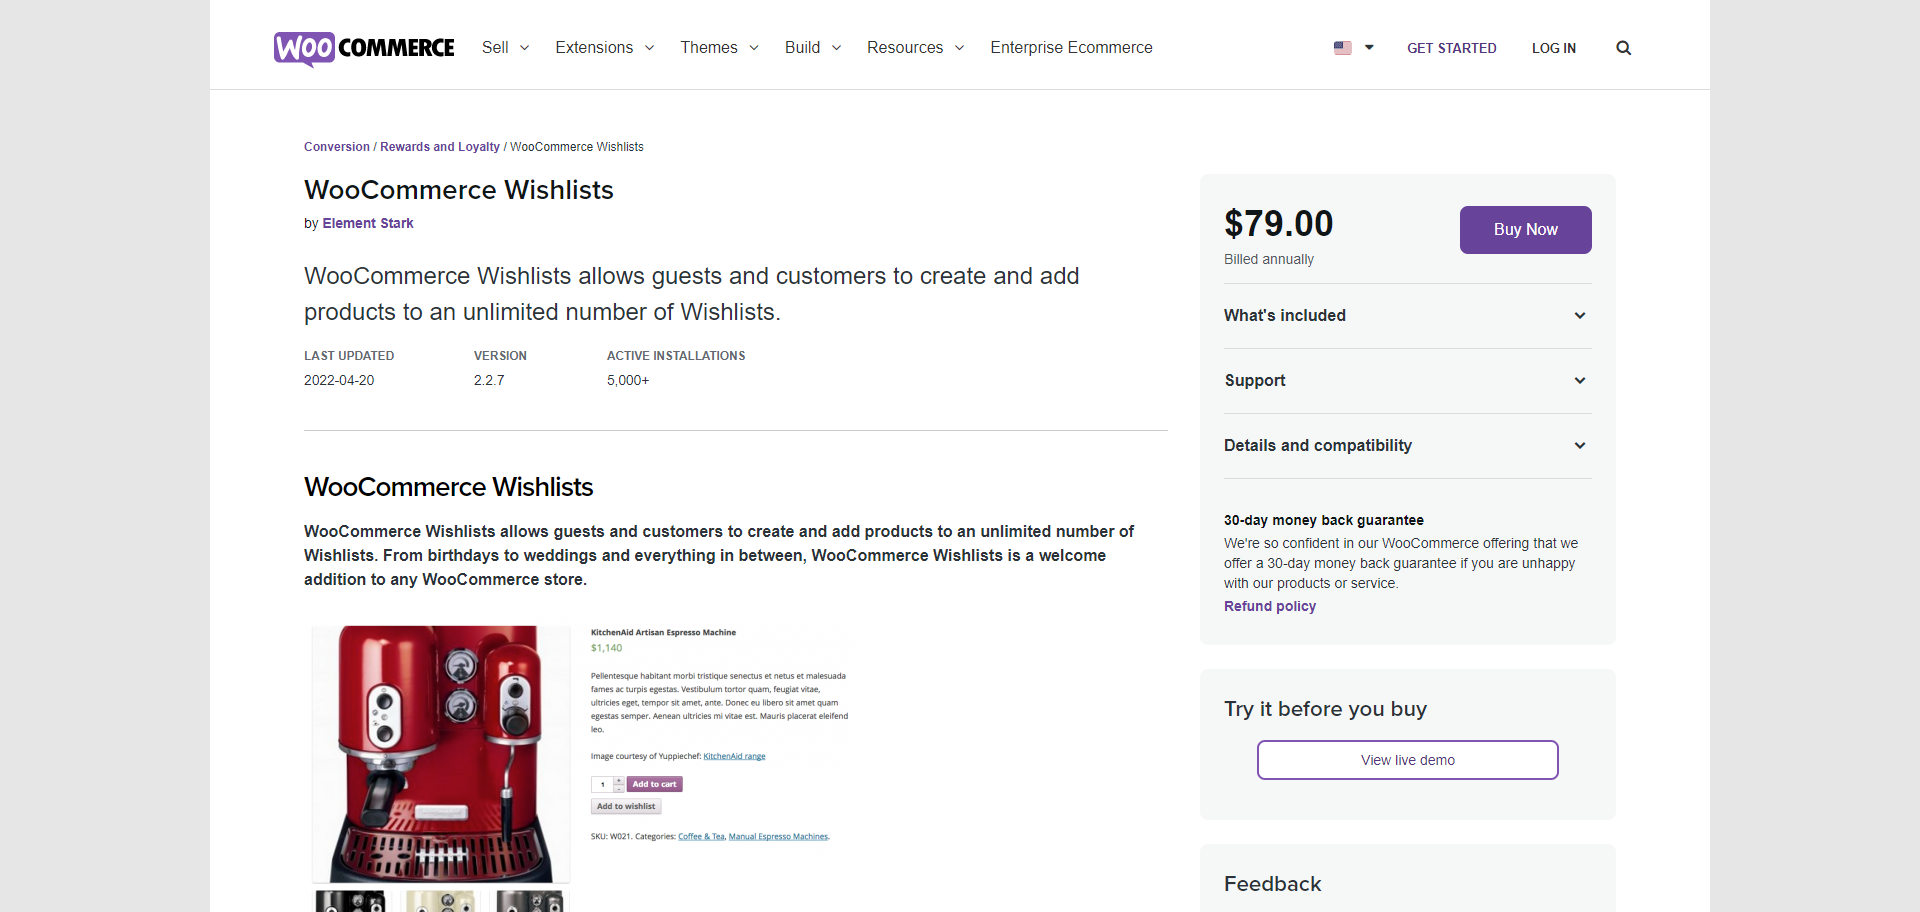 WooCommerce Wishlists by Element Stark $79.00 Billed annually Buy Now WooCommerce Wishlists